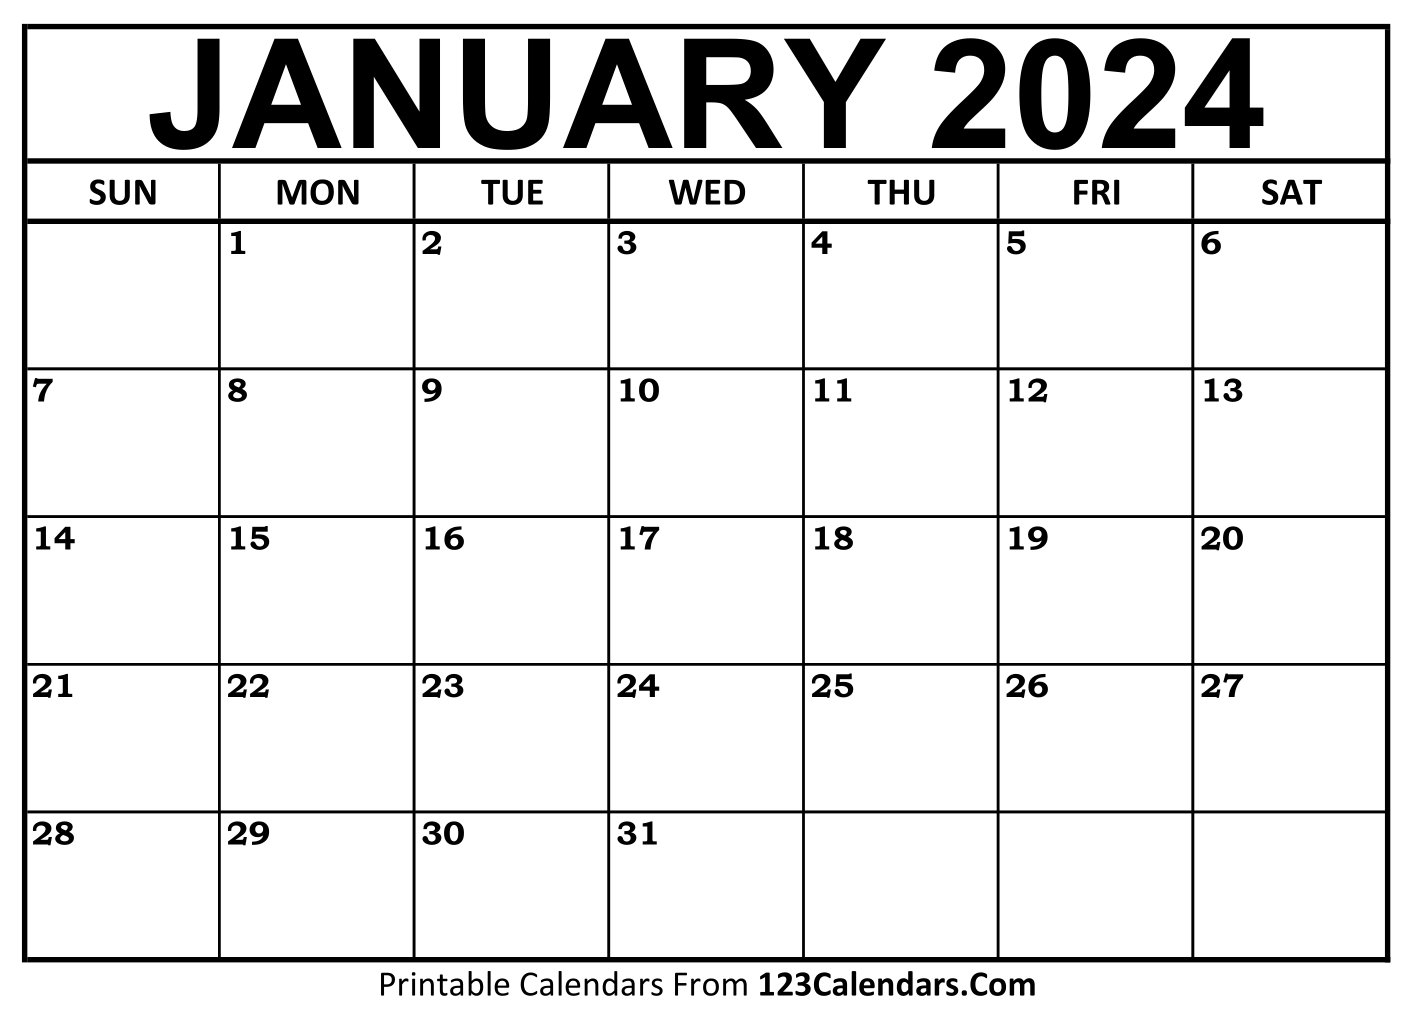 Printable January 2024 Calendar Templates - 123Calendars for 2024 Calendar January Printable